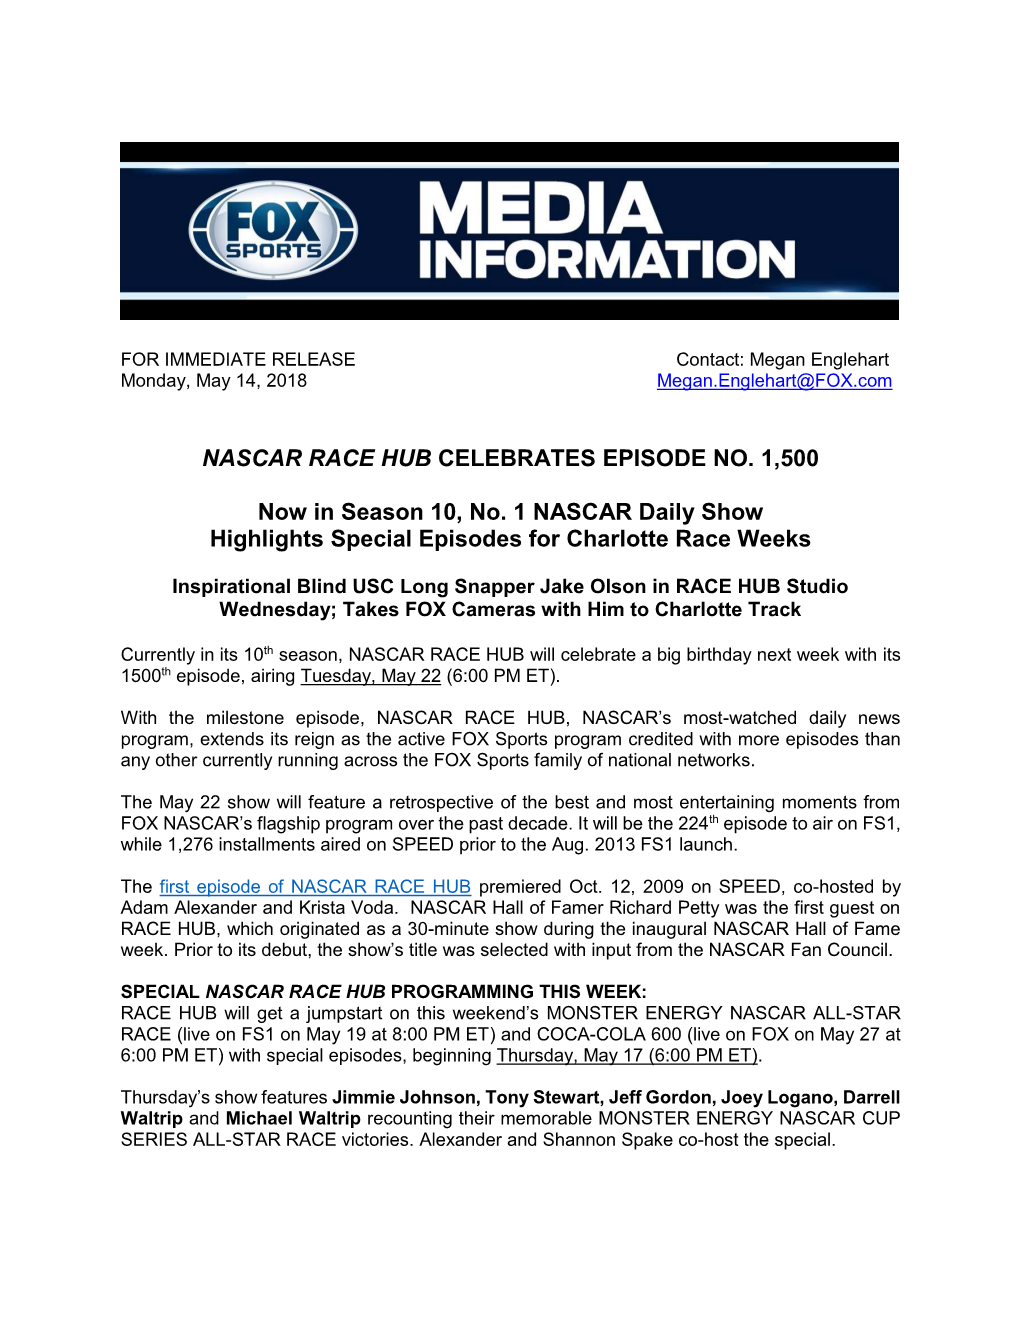 NASCAR RACE HUB Celebrates Episode No. 1500